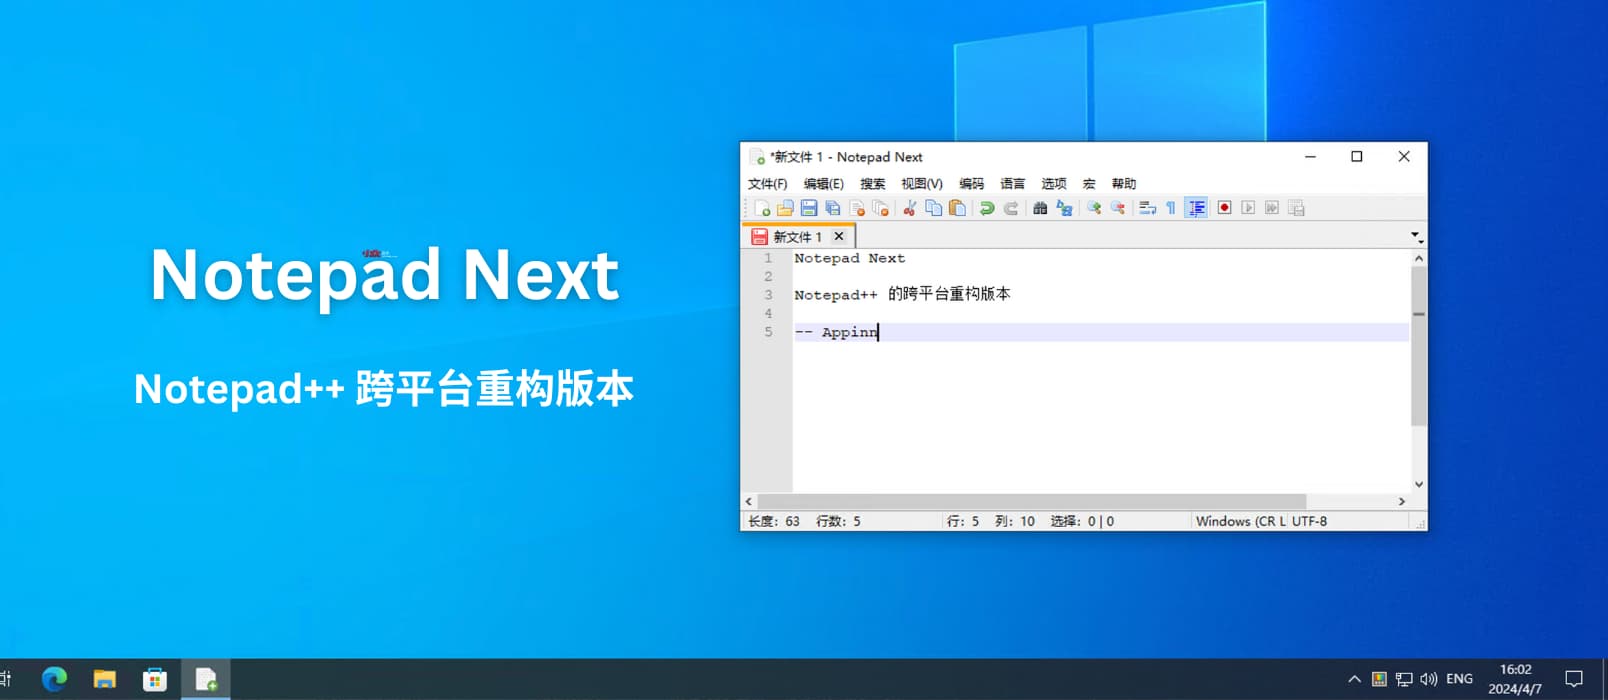 Notepad Next - 开源源代码编辑，Notepad++ 的跨平台重构版本